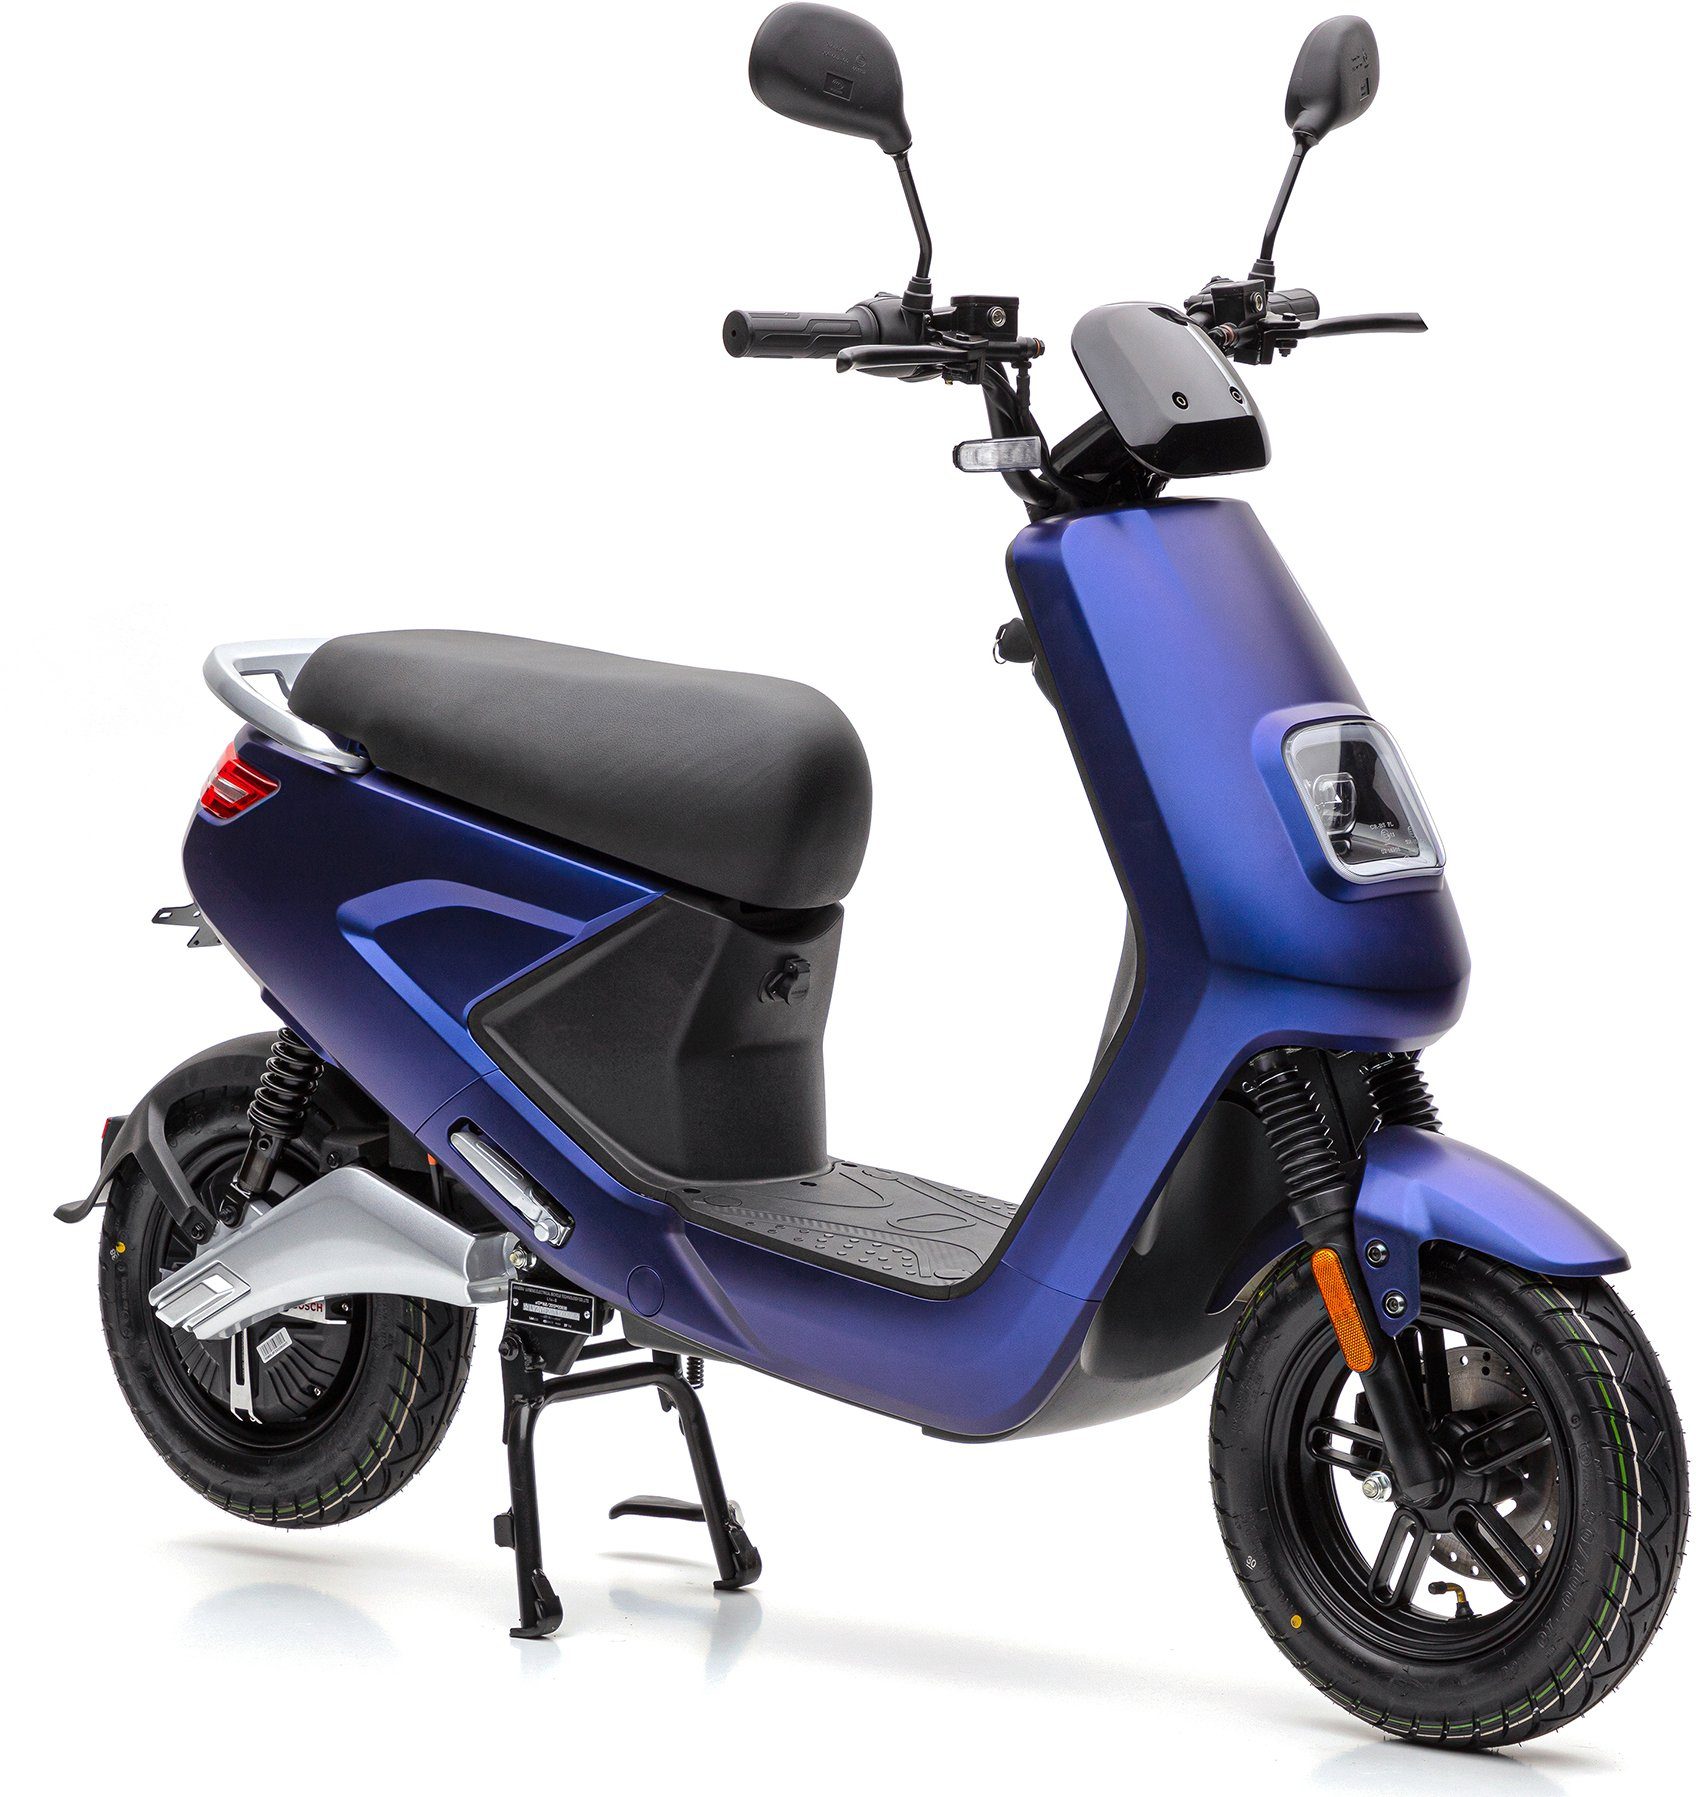 S4 (Packung) Motors Lithium, W, km/h blau 45 E-Motorroller Nova 1400